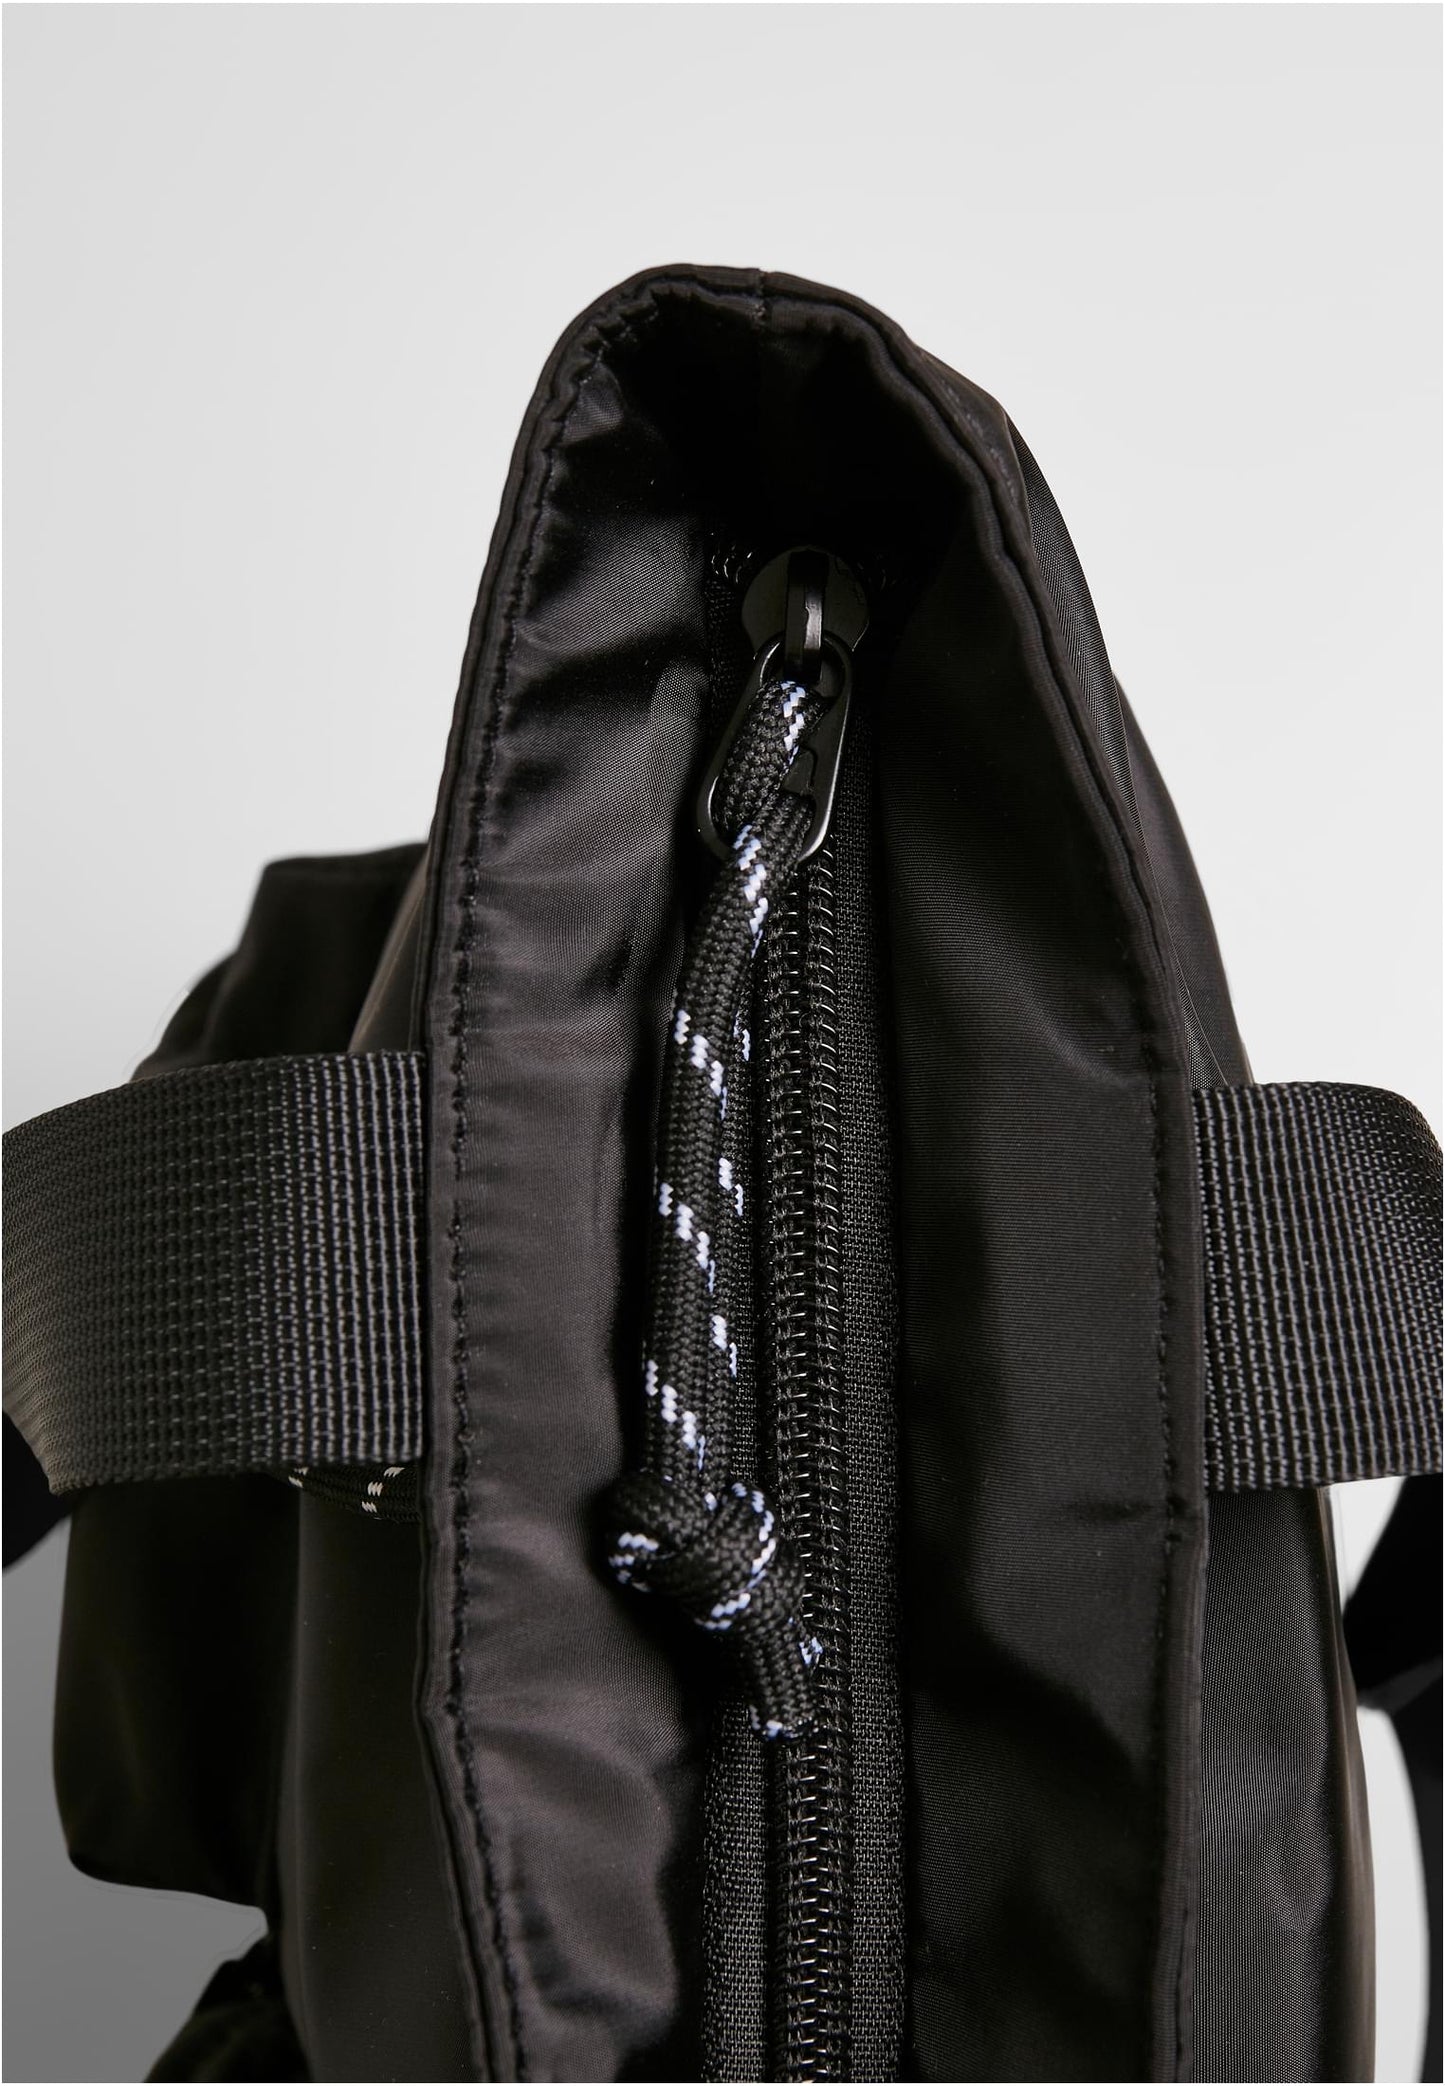 Multifunctional Tote Bag, Black